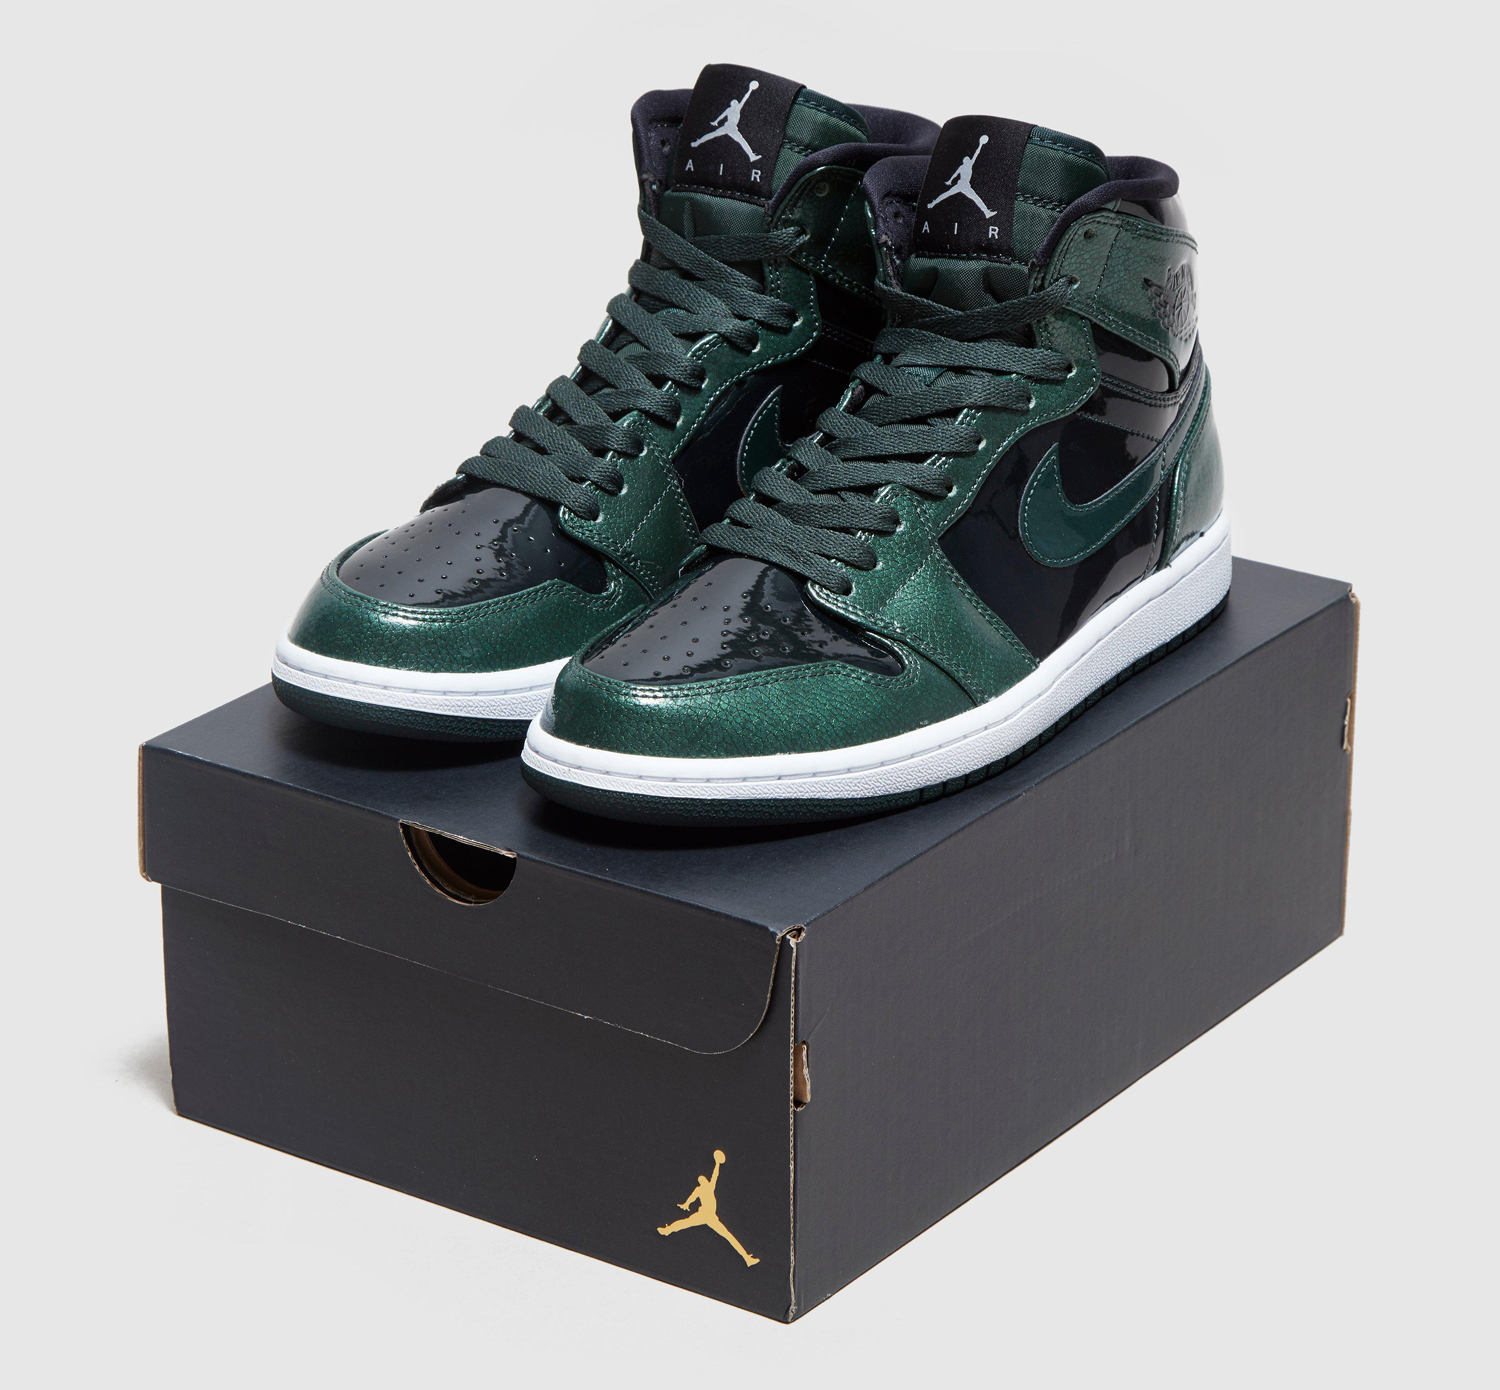 Air Jordan 1 Gorge Green Patent Leather 332550-300 Box